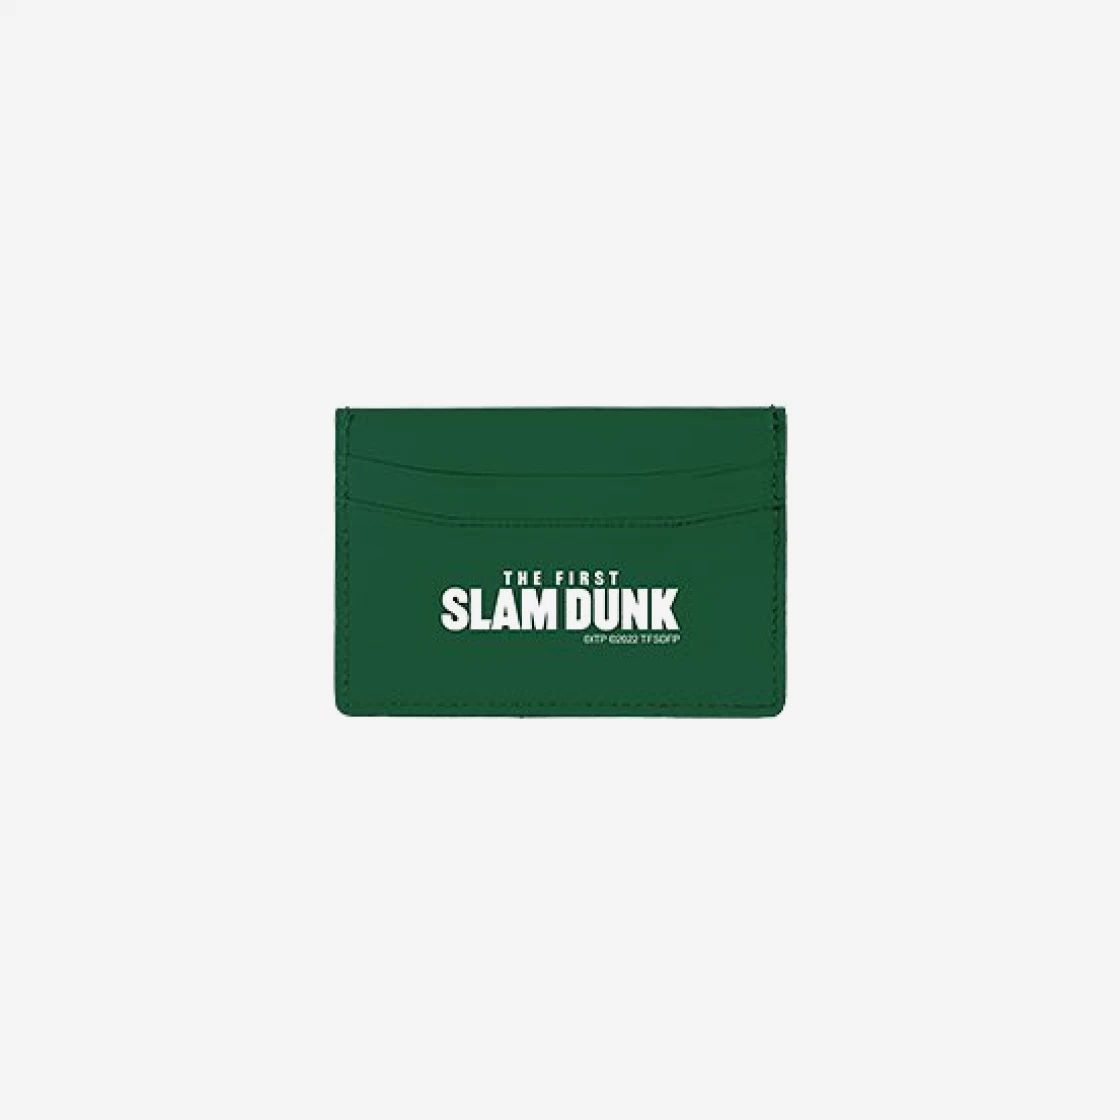 https://d2cva83hdk3bwc.cloudfront.net/the-first-slam-dunk-x-smith-leather-card-pocket-logo-green-1.jpg